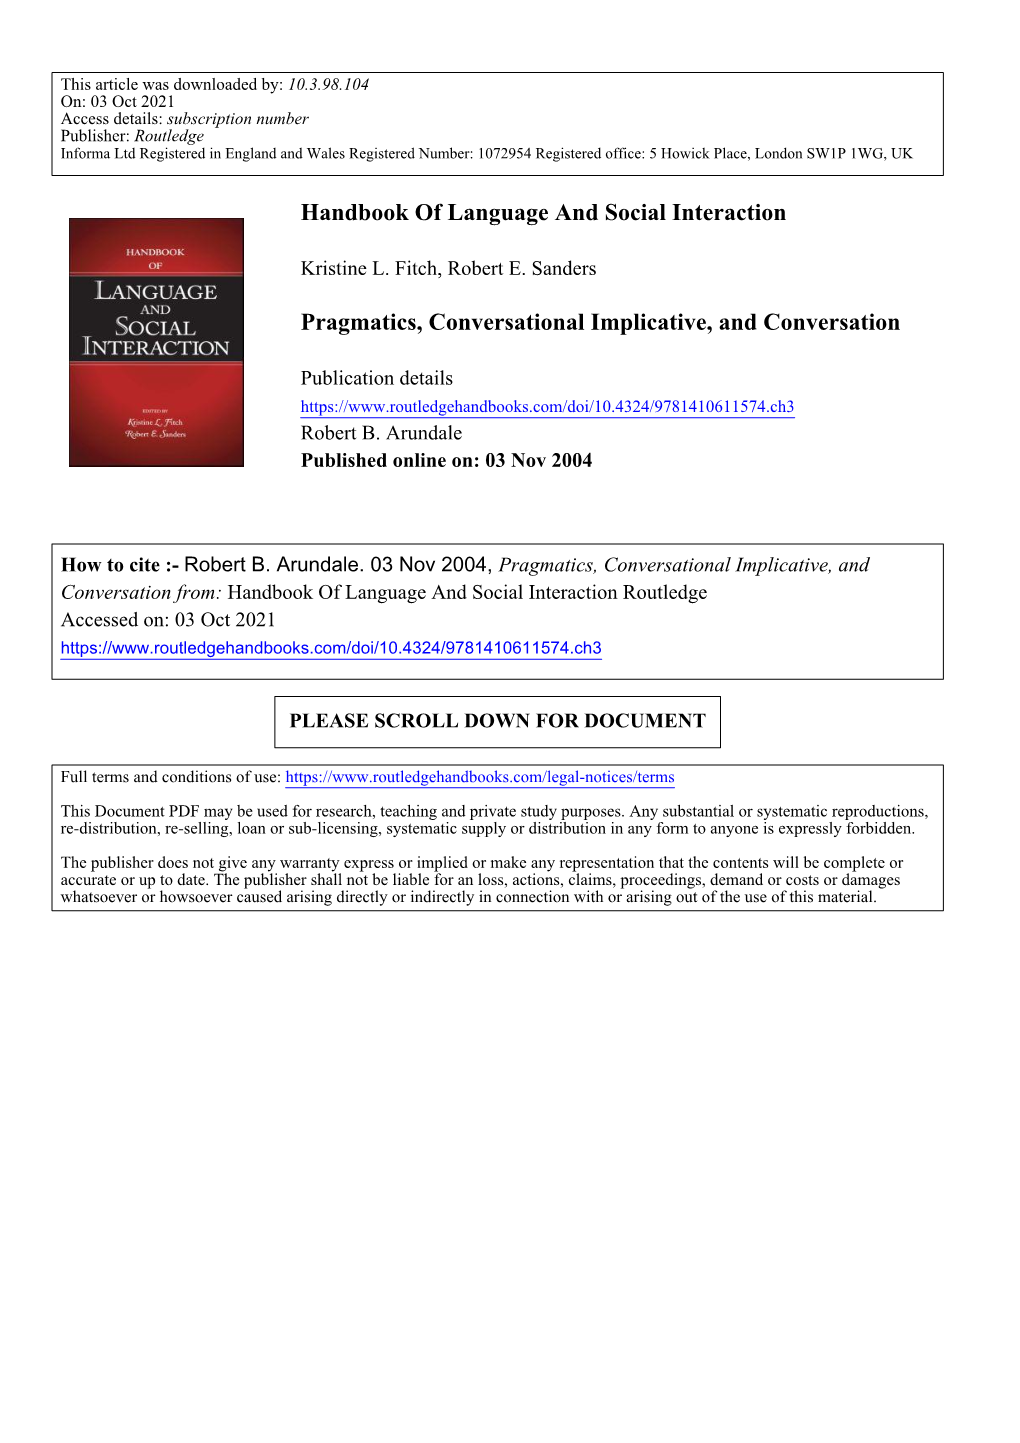 Handbook of Language and Social Interaction Pragmatics